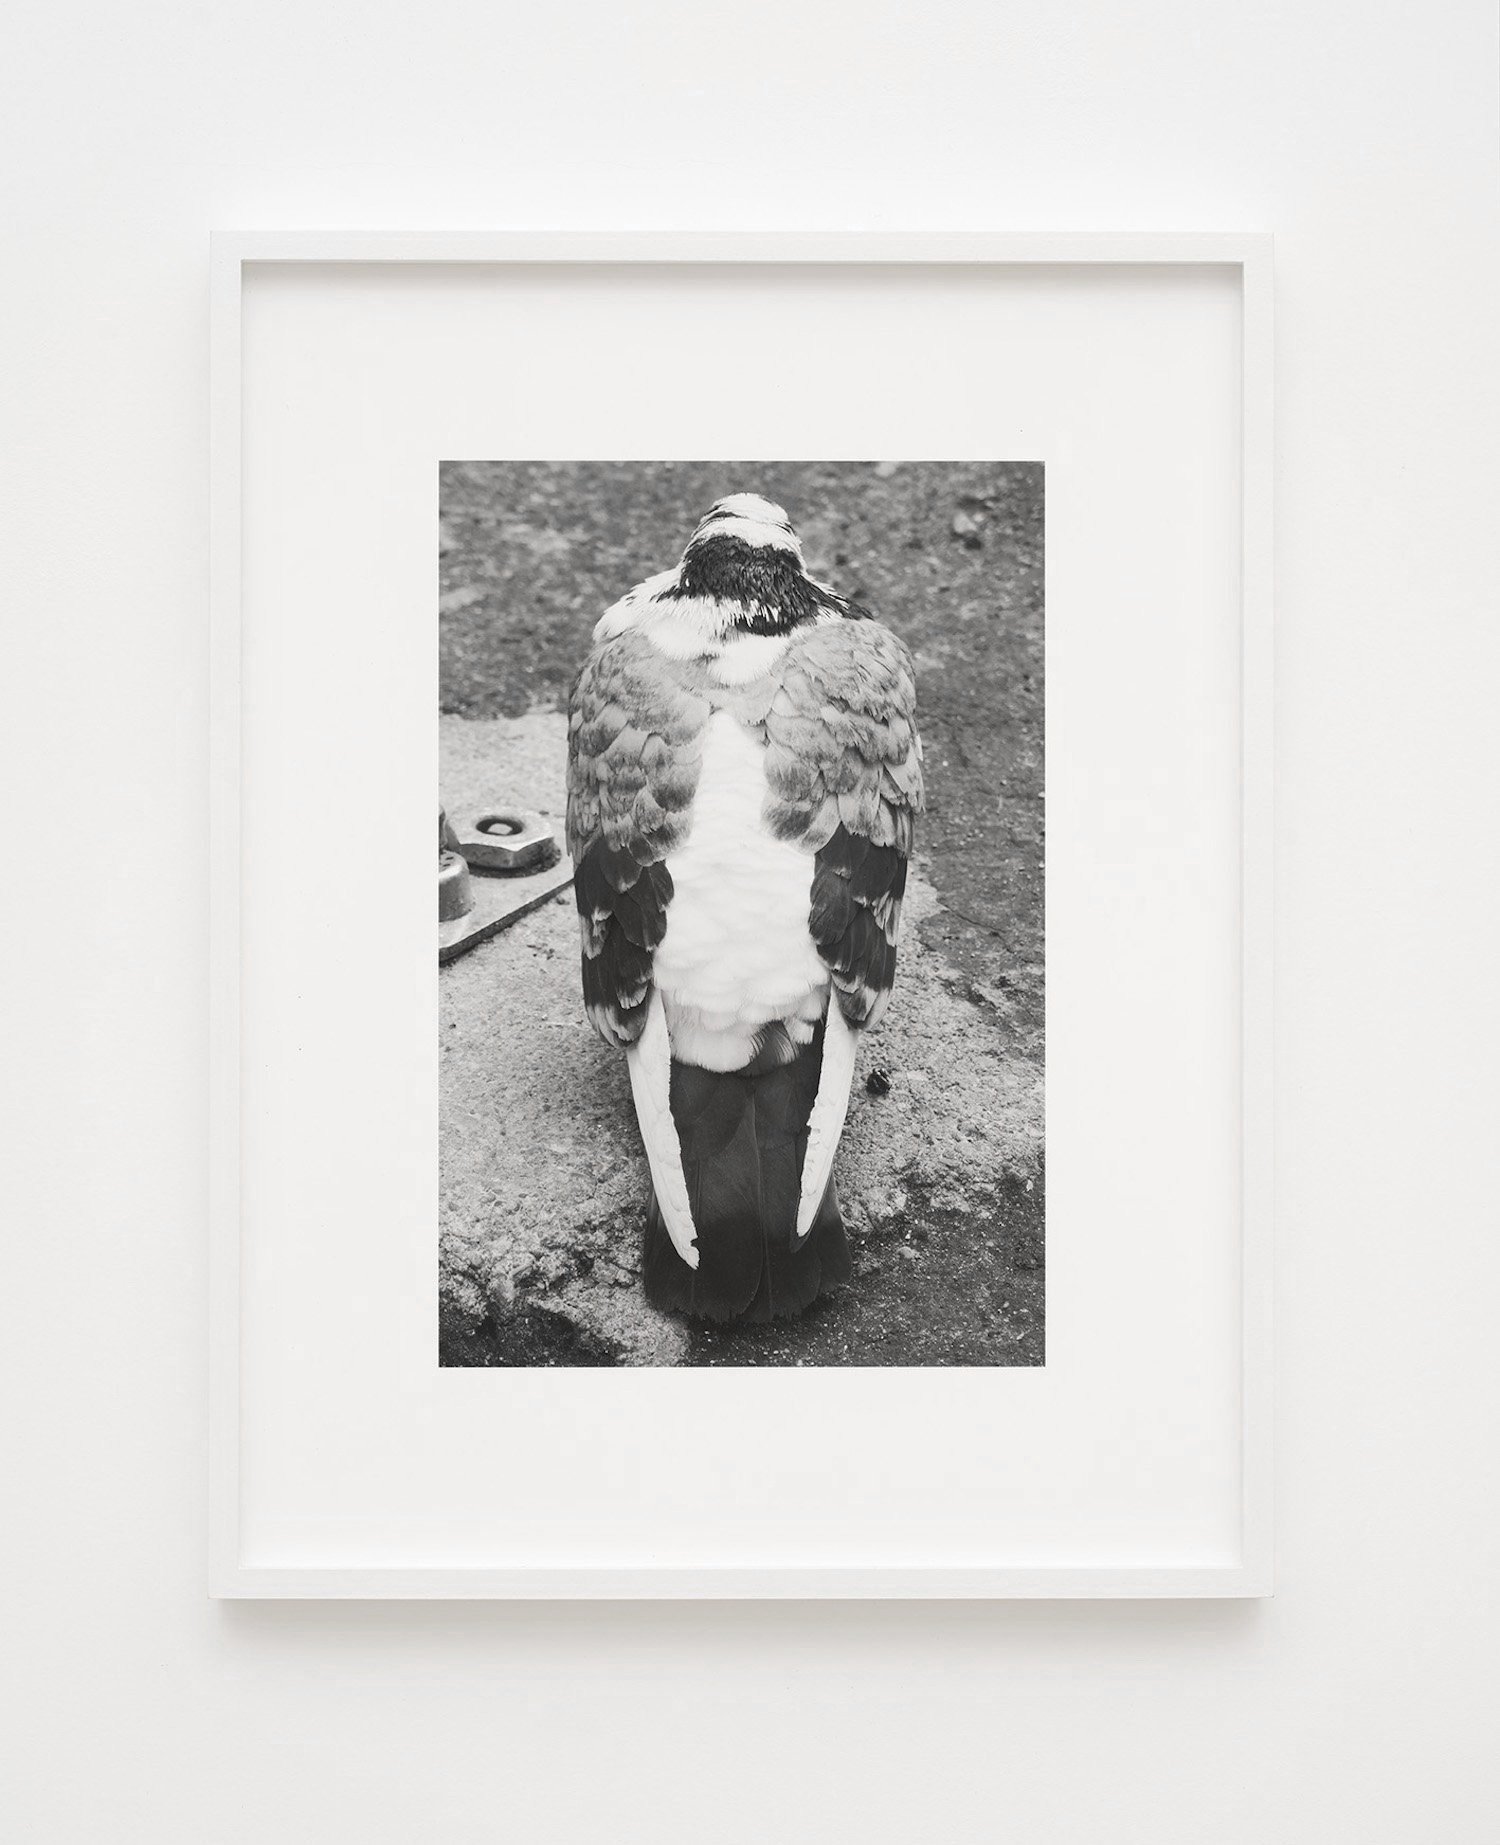  pigeon 2022  28 x 36 cm, archival pigment print on cotton rag (ed. of 3 + 1 ap) 